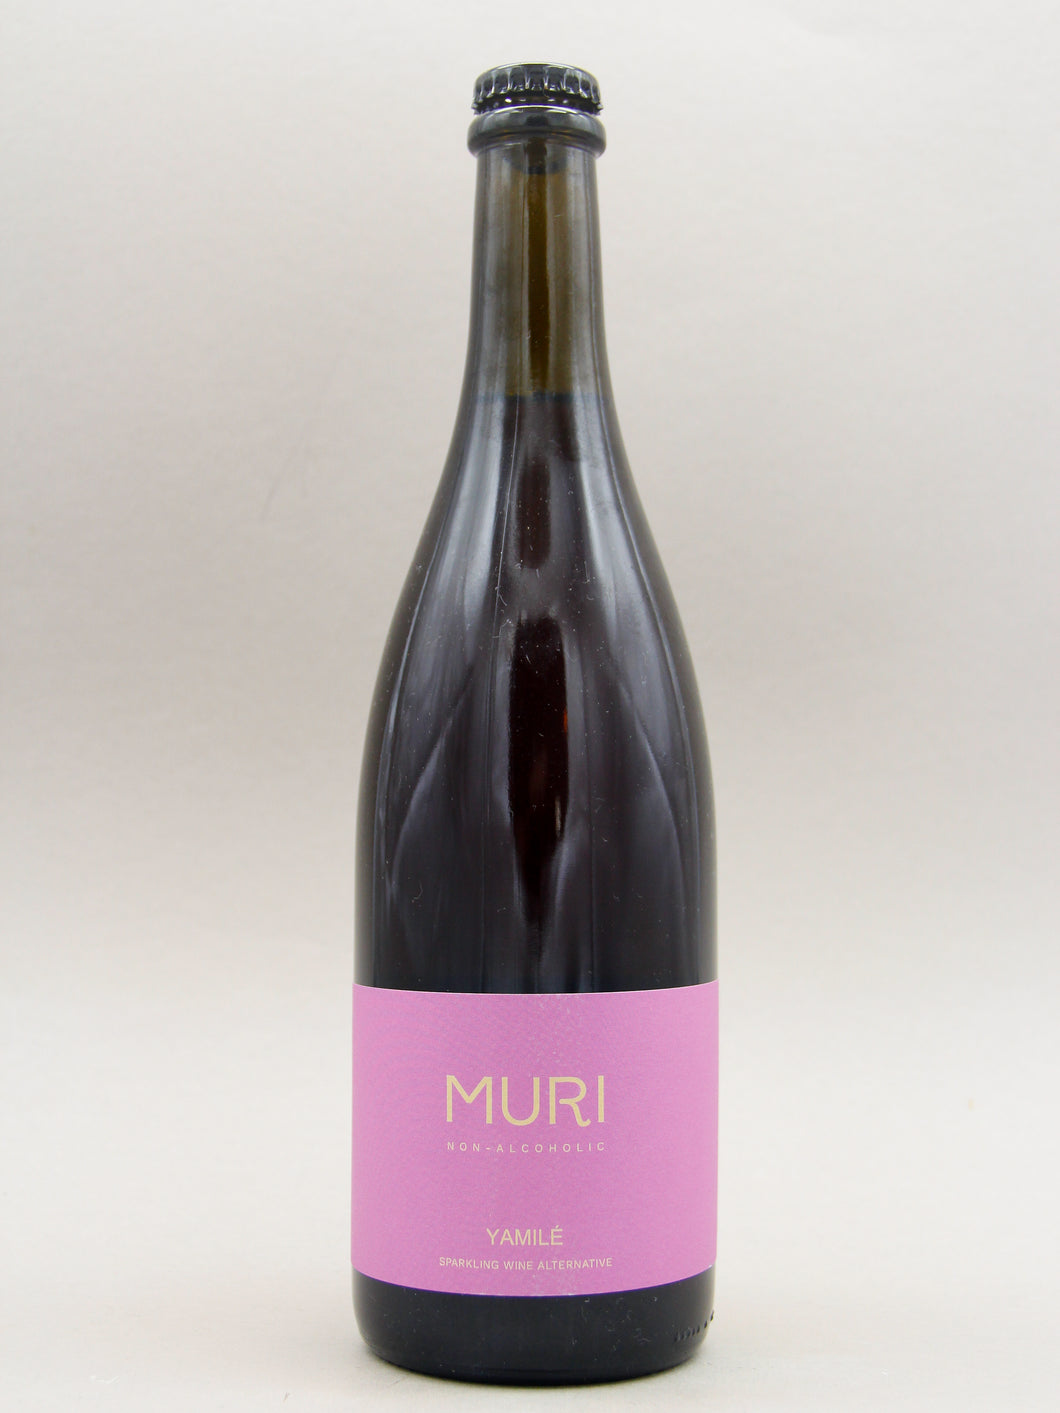 Muri, Yamilé, Non-Alc Sparkling Wine Alternative (0.4%, 75cl)